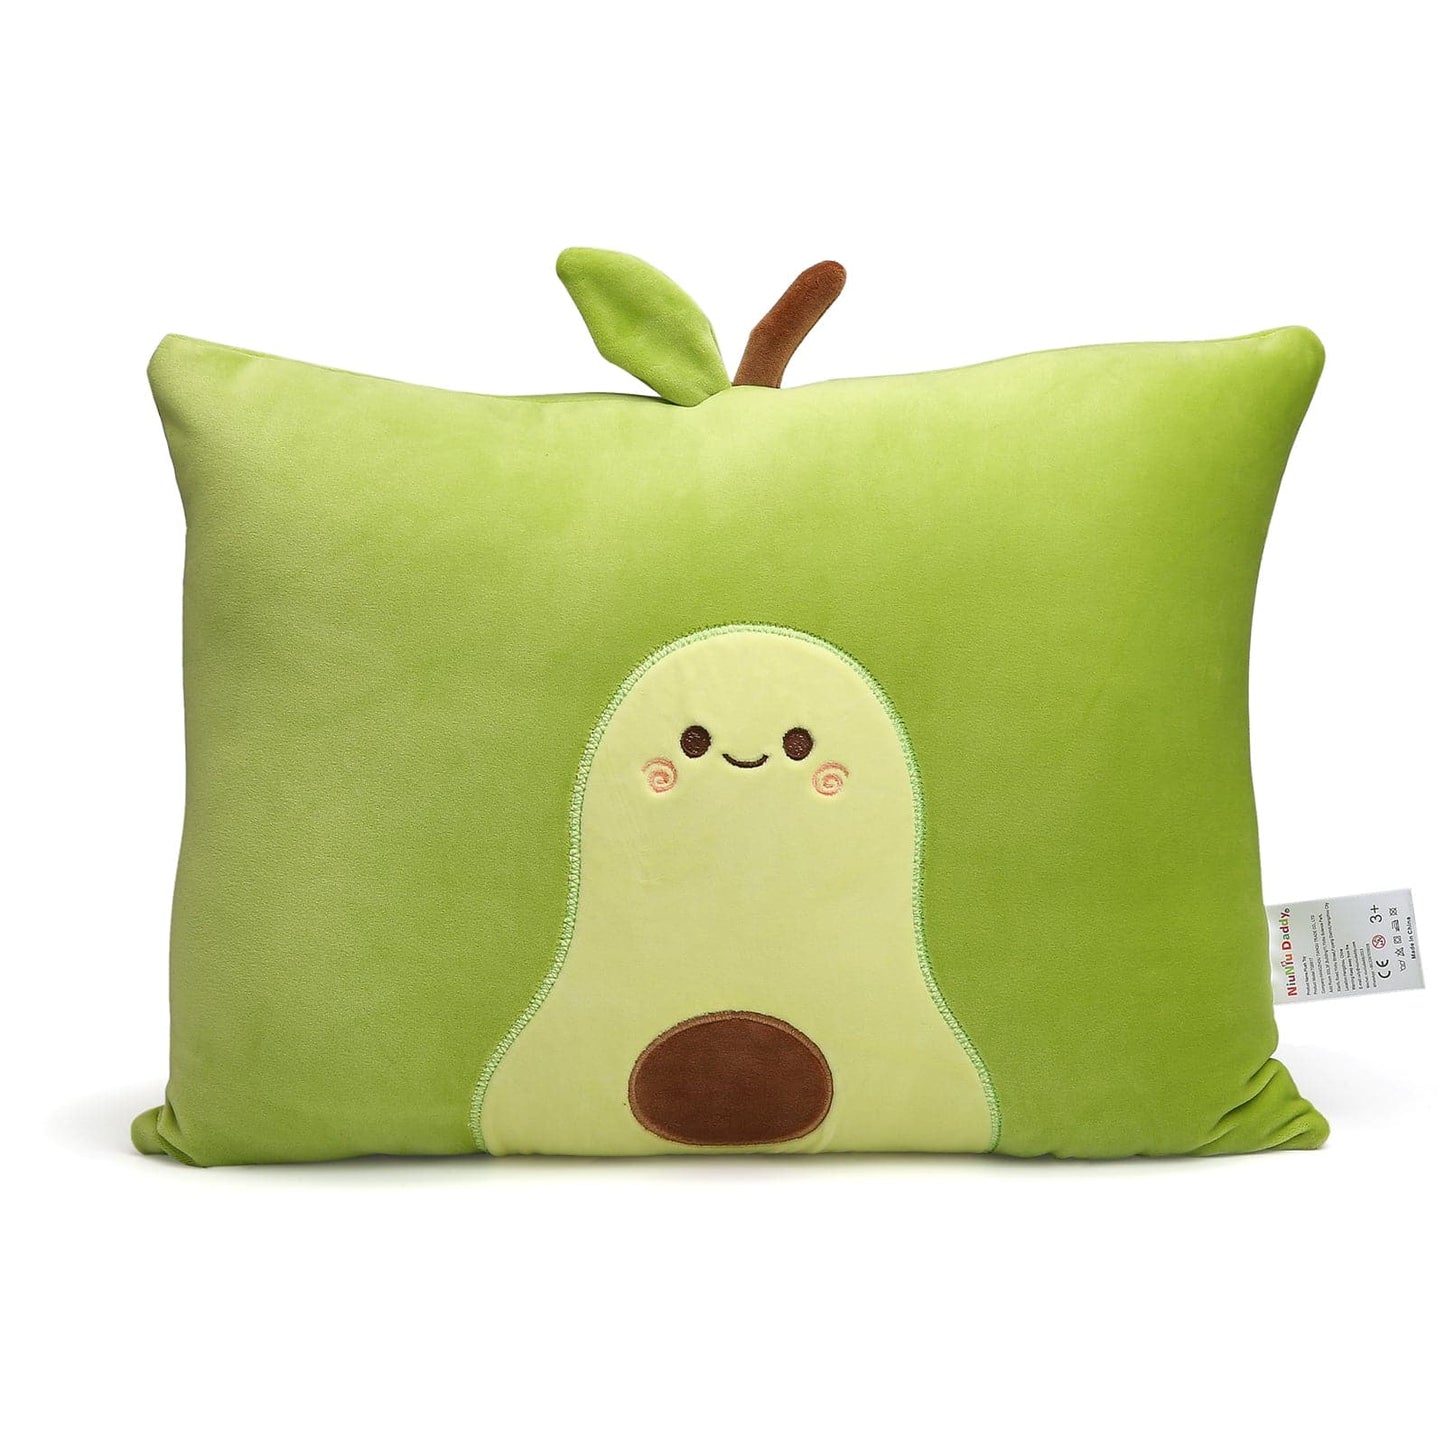 Niuniudaddy™ 18x12 Inches Avocado Plush Pillow